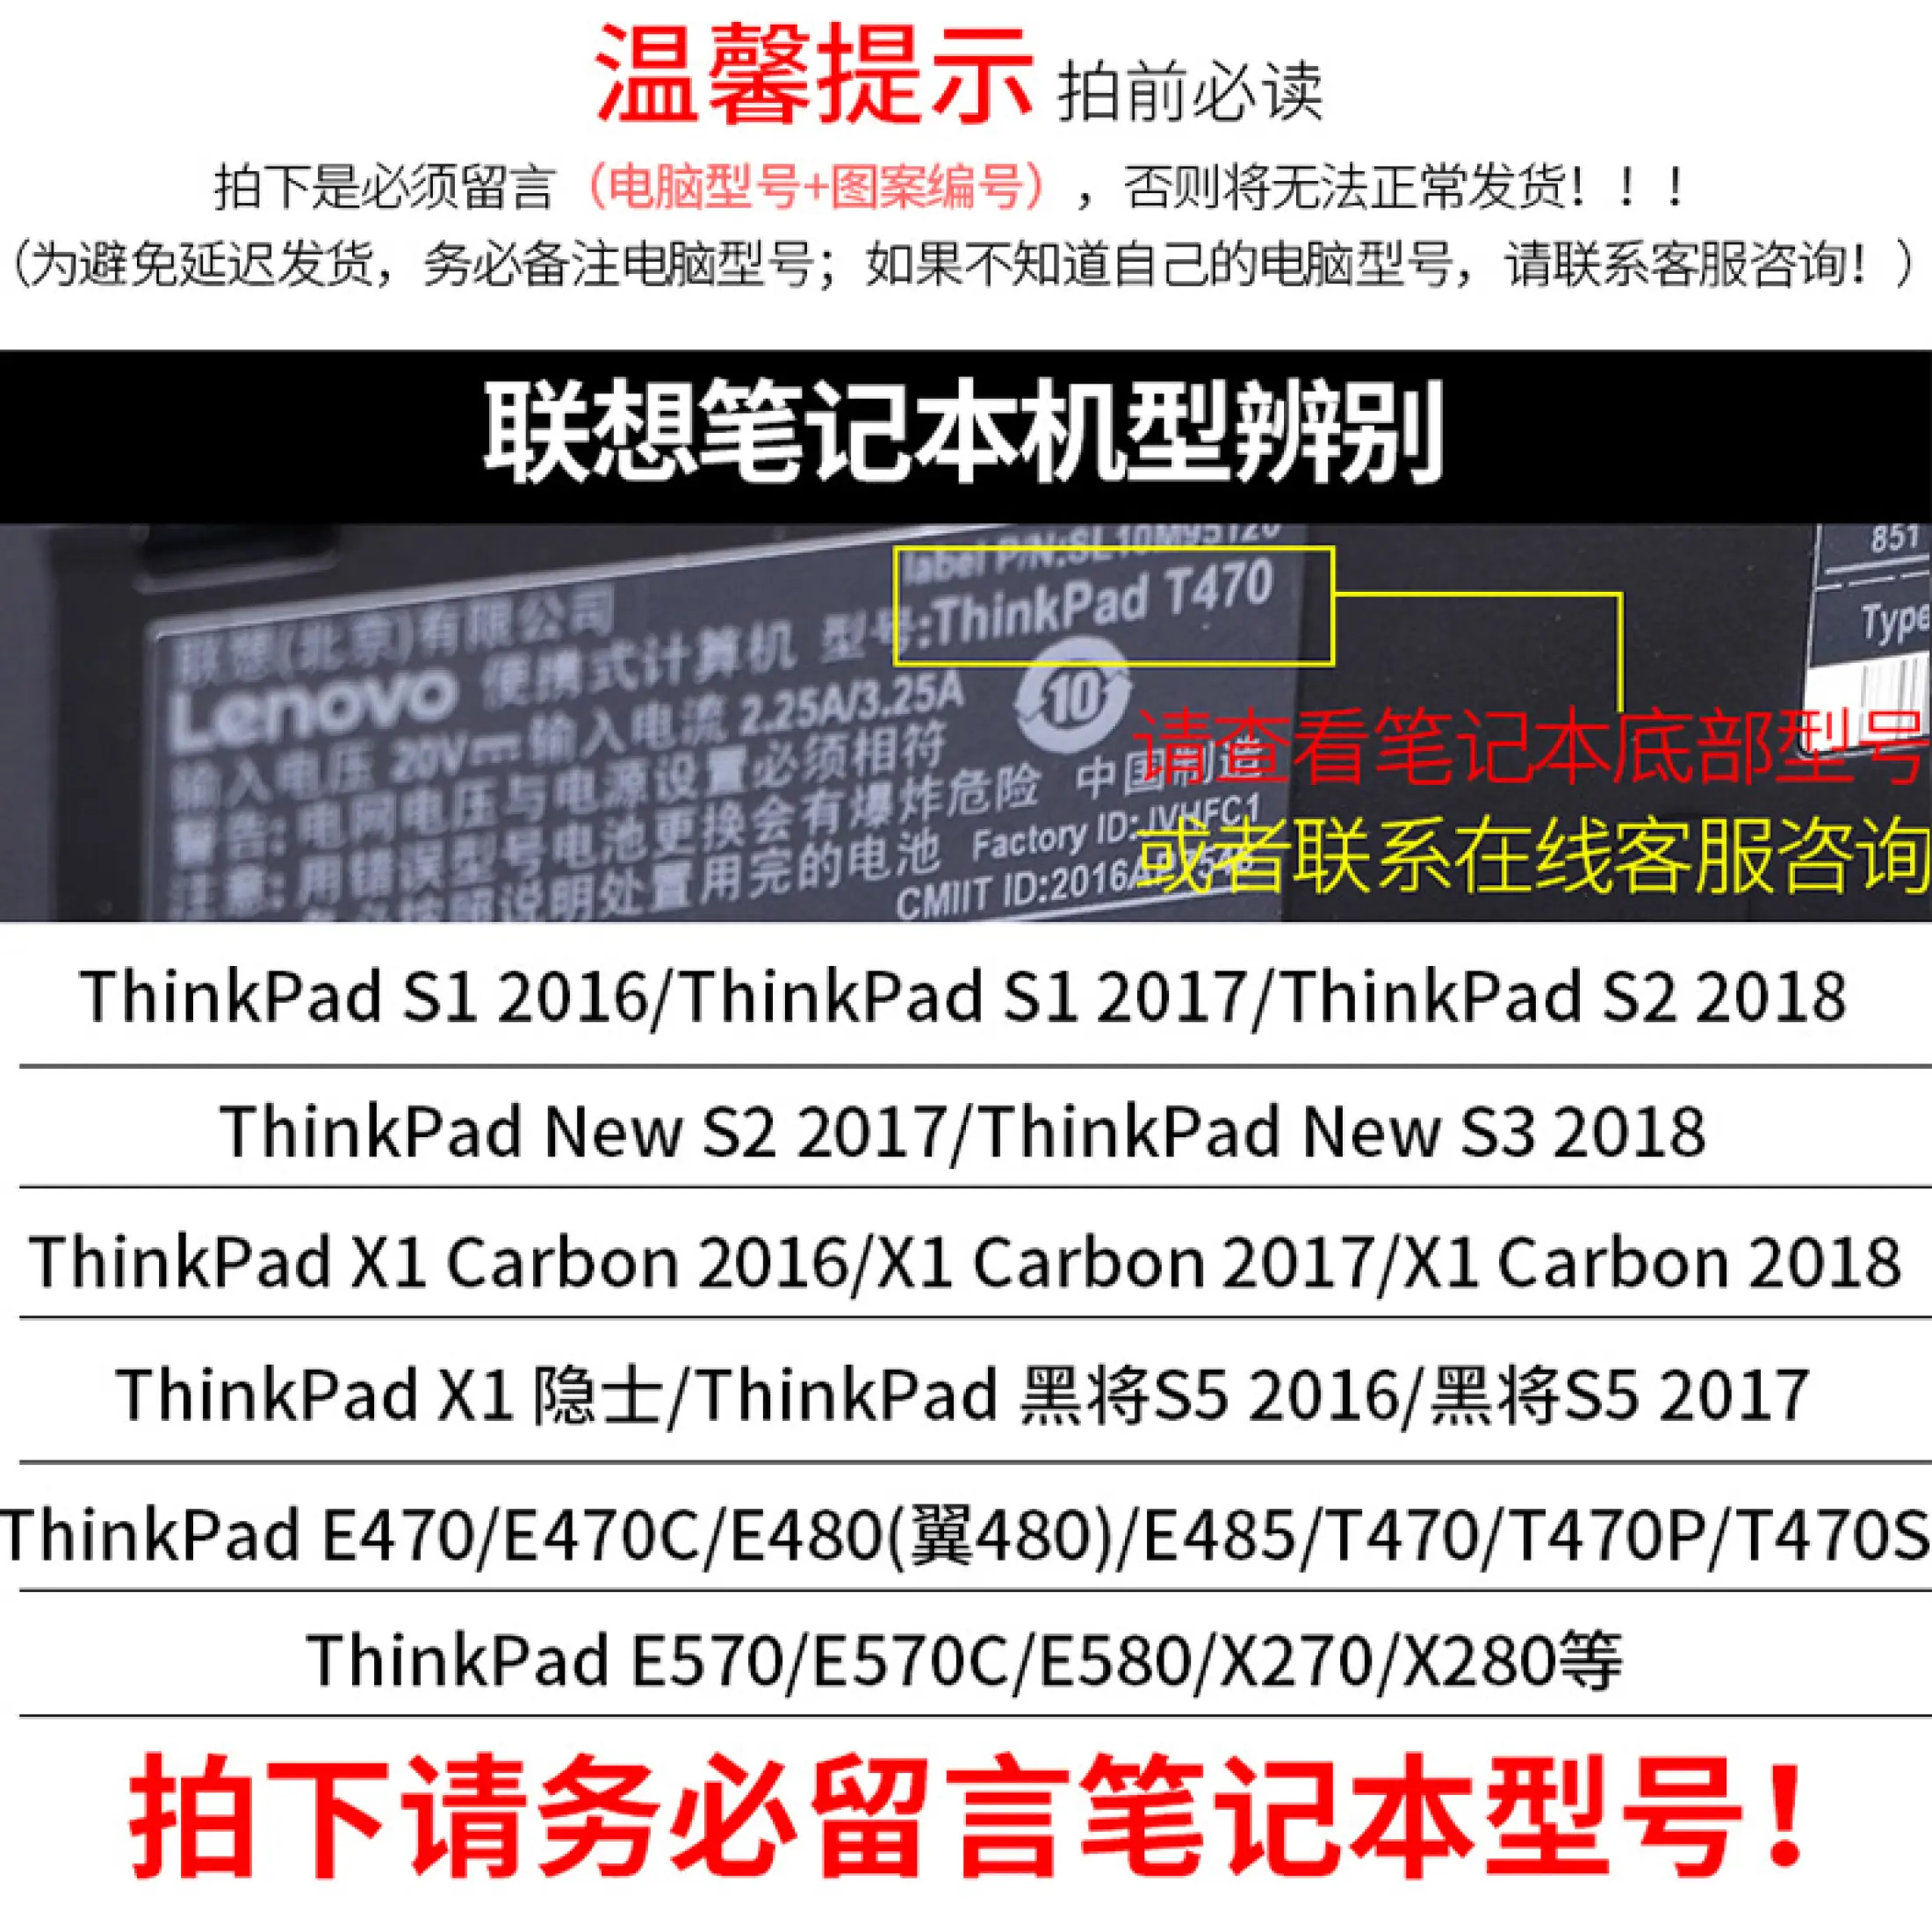 Lenovo Thinkpad Laptop Computer Sticker E480 E580 14 Inches 15 6 Keyboard X390 Button T470 Case X280 Protector E470c X1 Hermit Carbon T480 Lazada Singapore